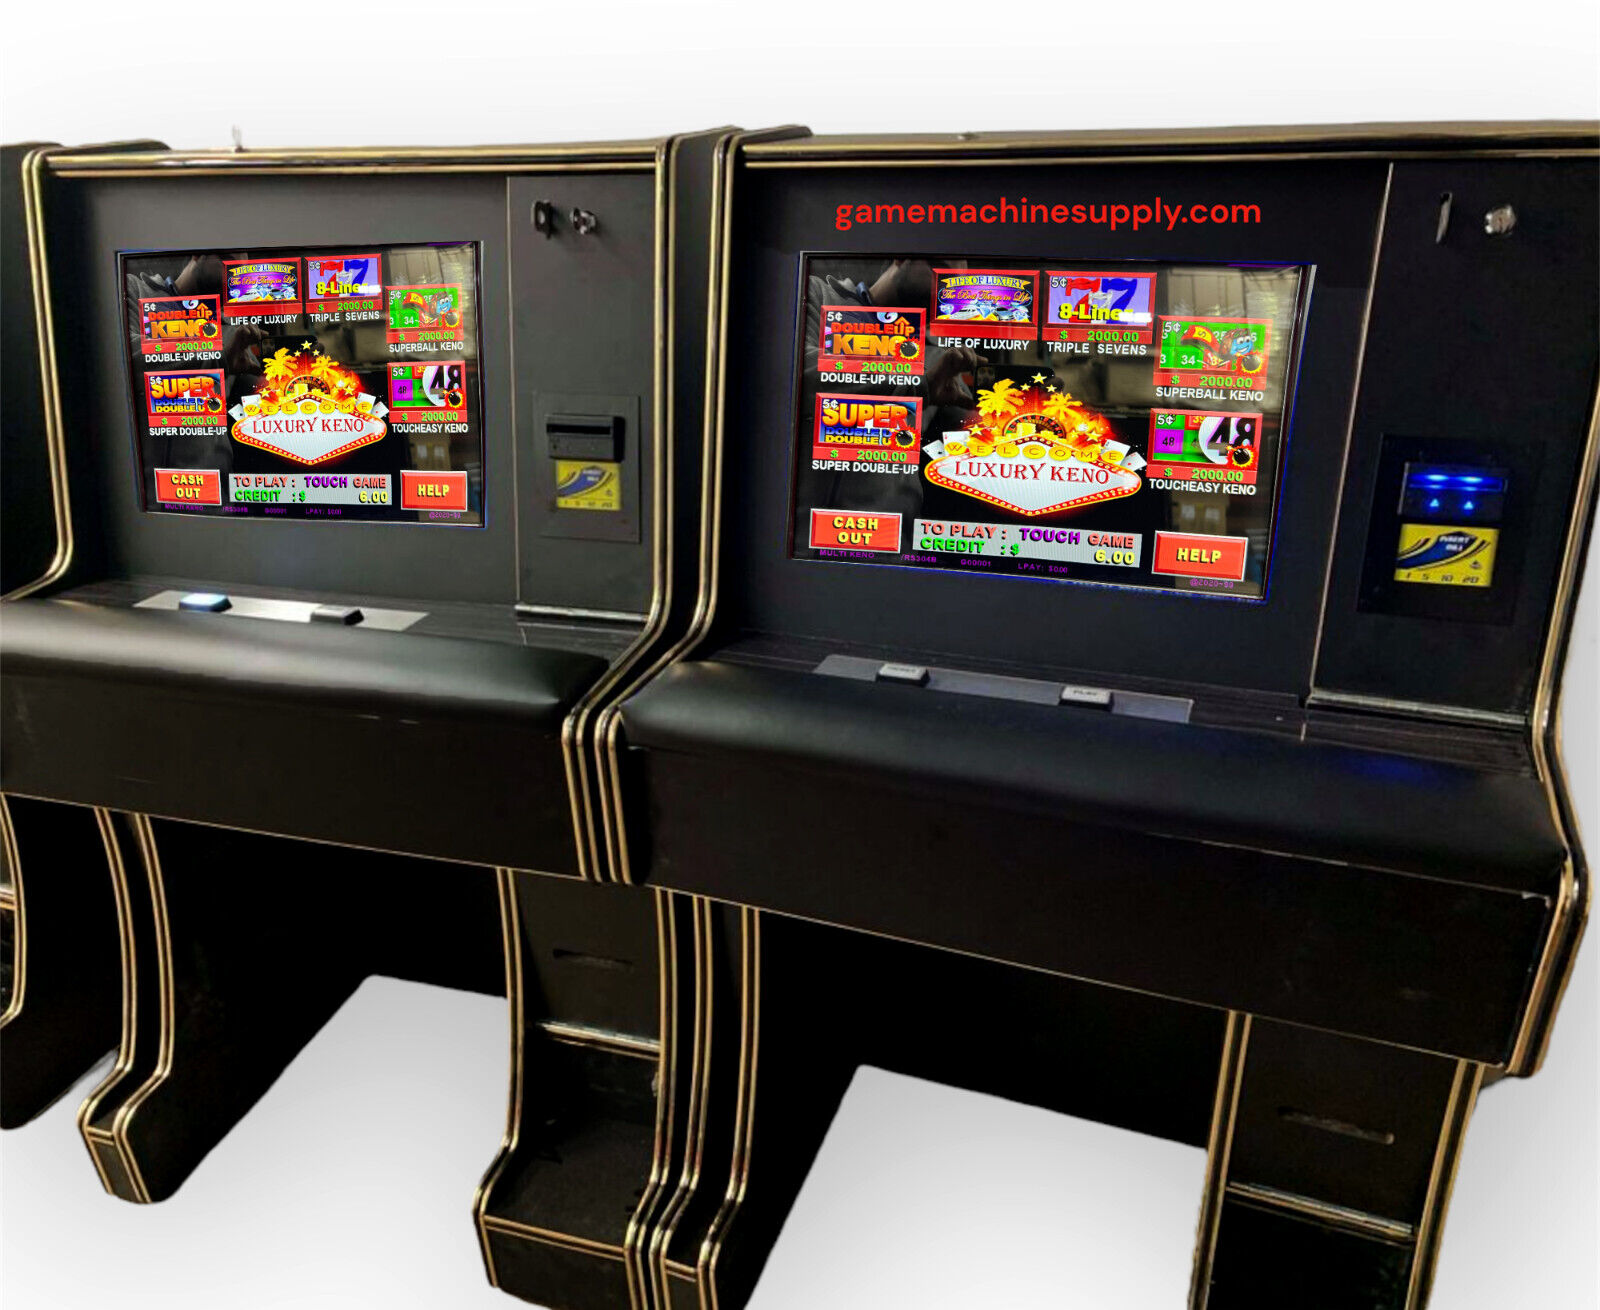 Luxury Keno - Includes Life of Luxury, Triple 7s, 4x Keno Games (Casino Machine)